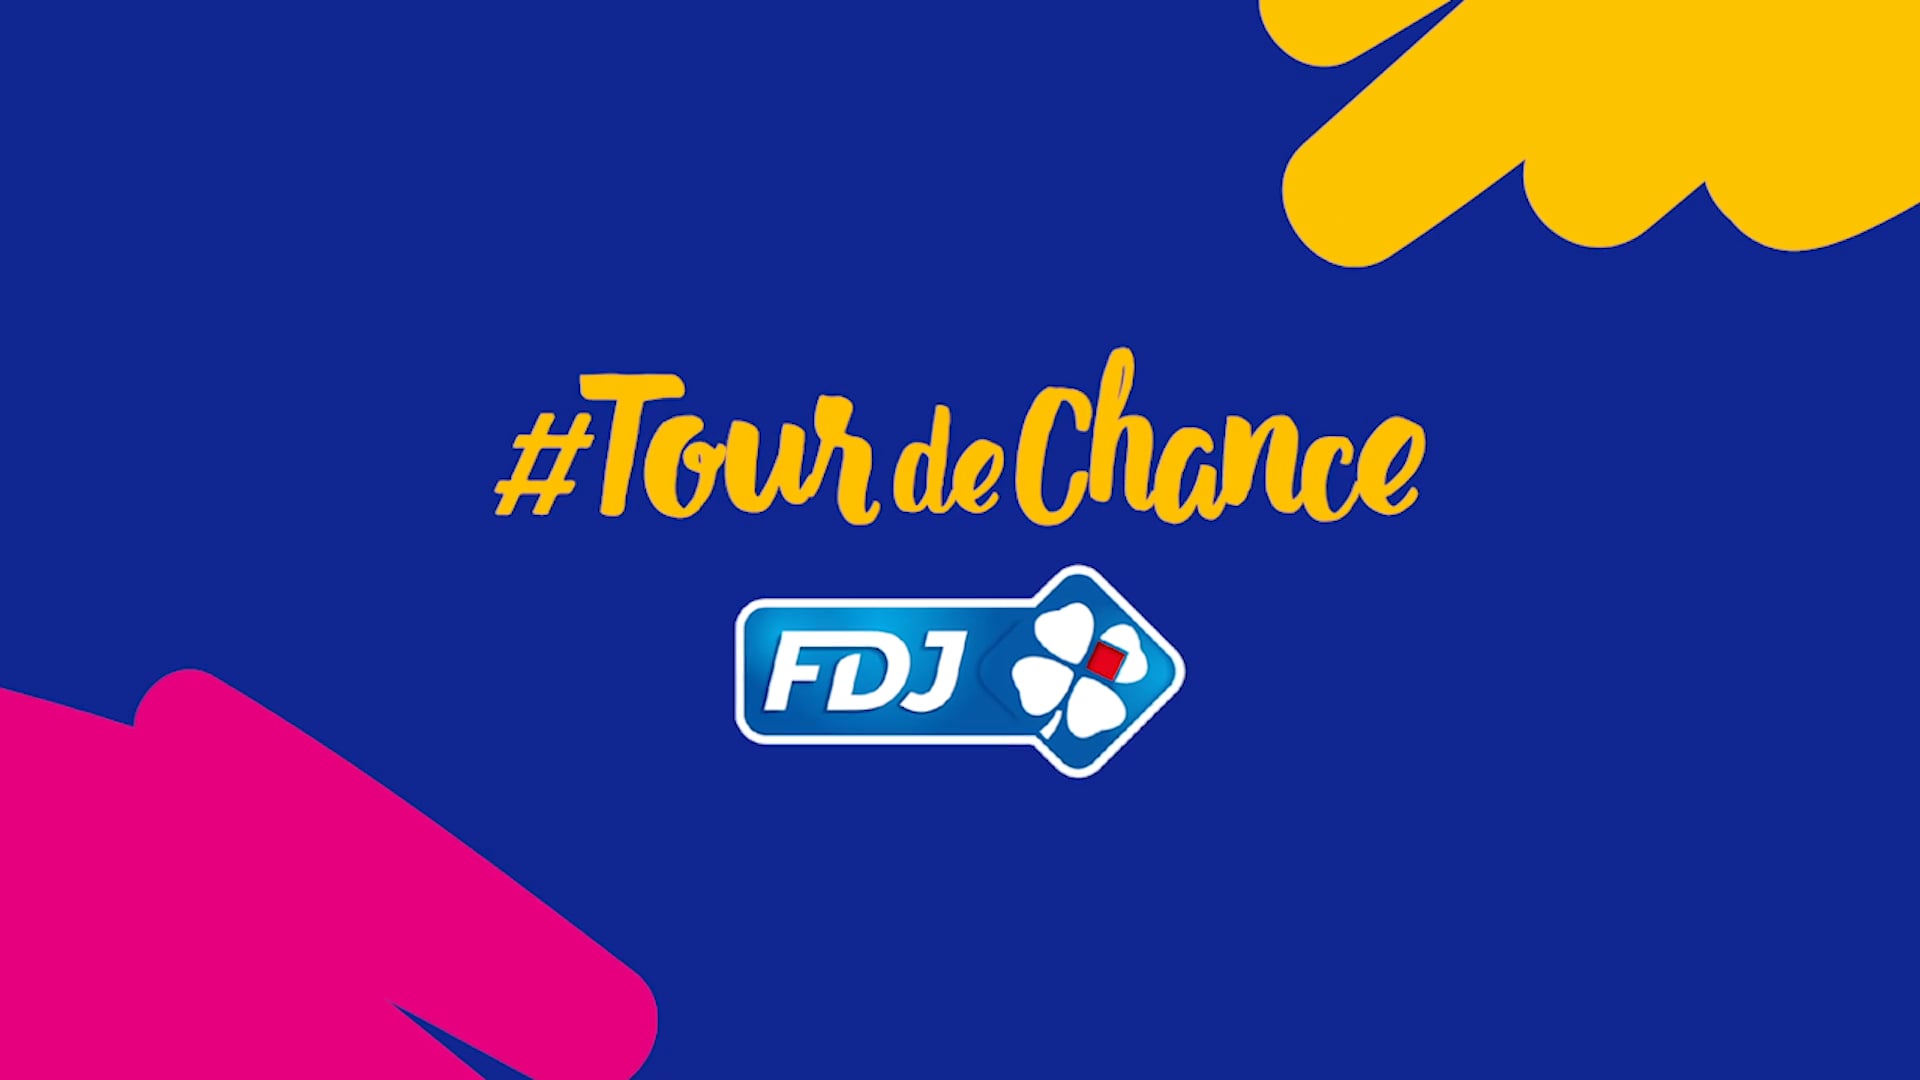 TOUR DE CHANCE FDJ 2019 on Vimeo